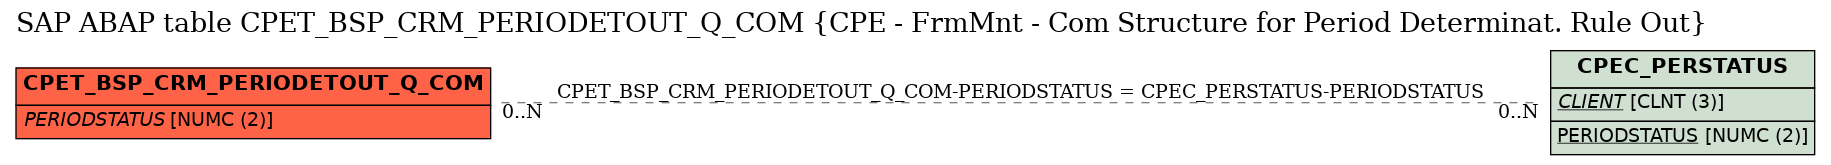 E-R Diagram for table CPET_BSP_CRM_PERIODETOUT_Q_COM (CPE - FrmMnt - Com Structure for Period Determinat. Rule Out)